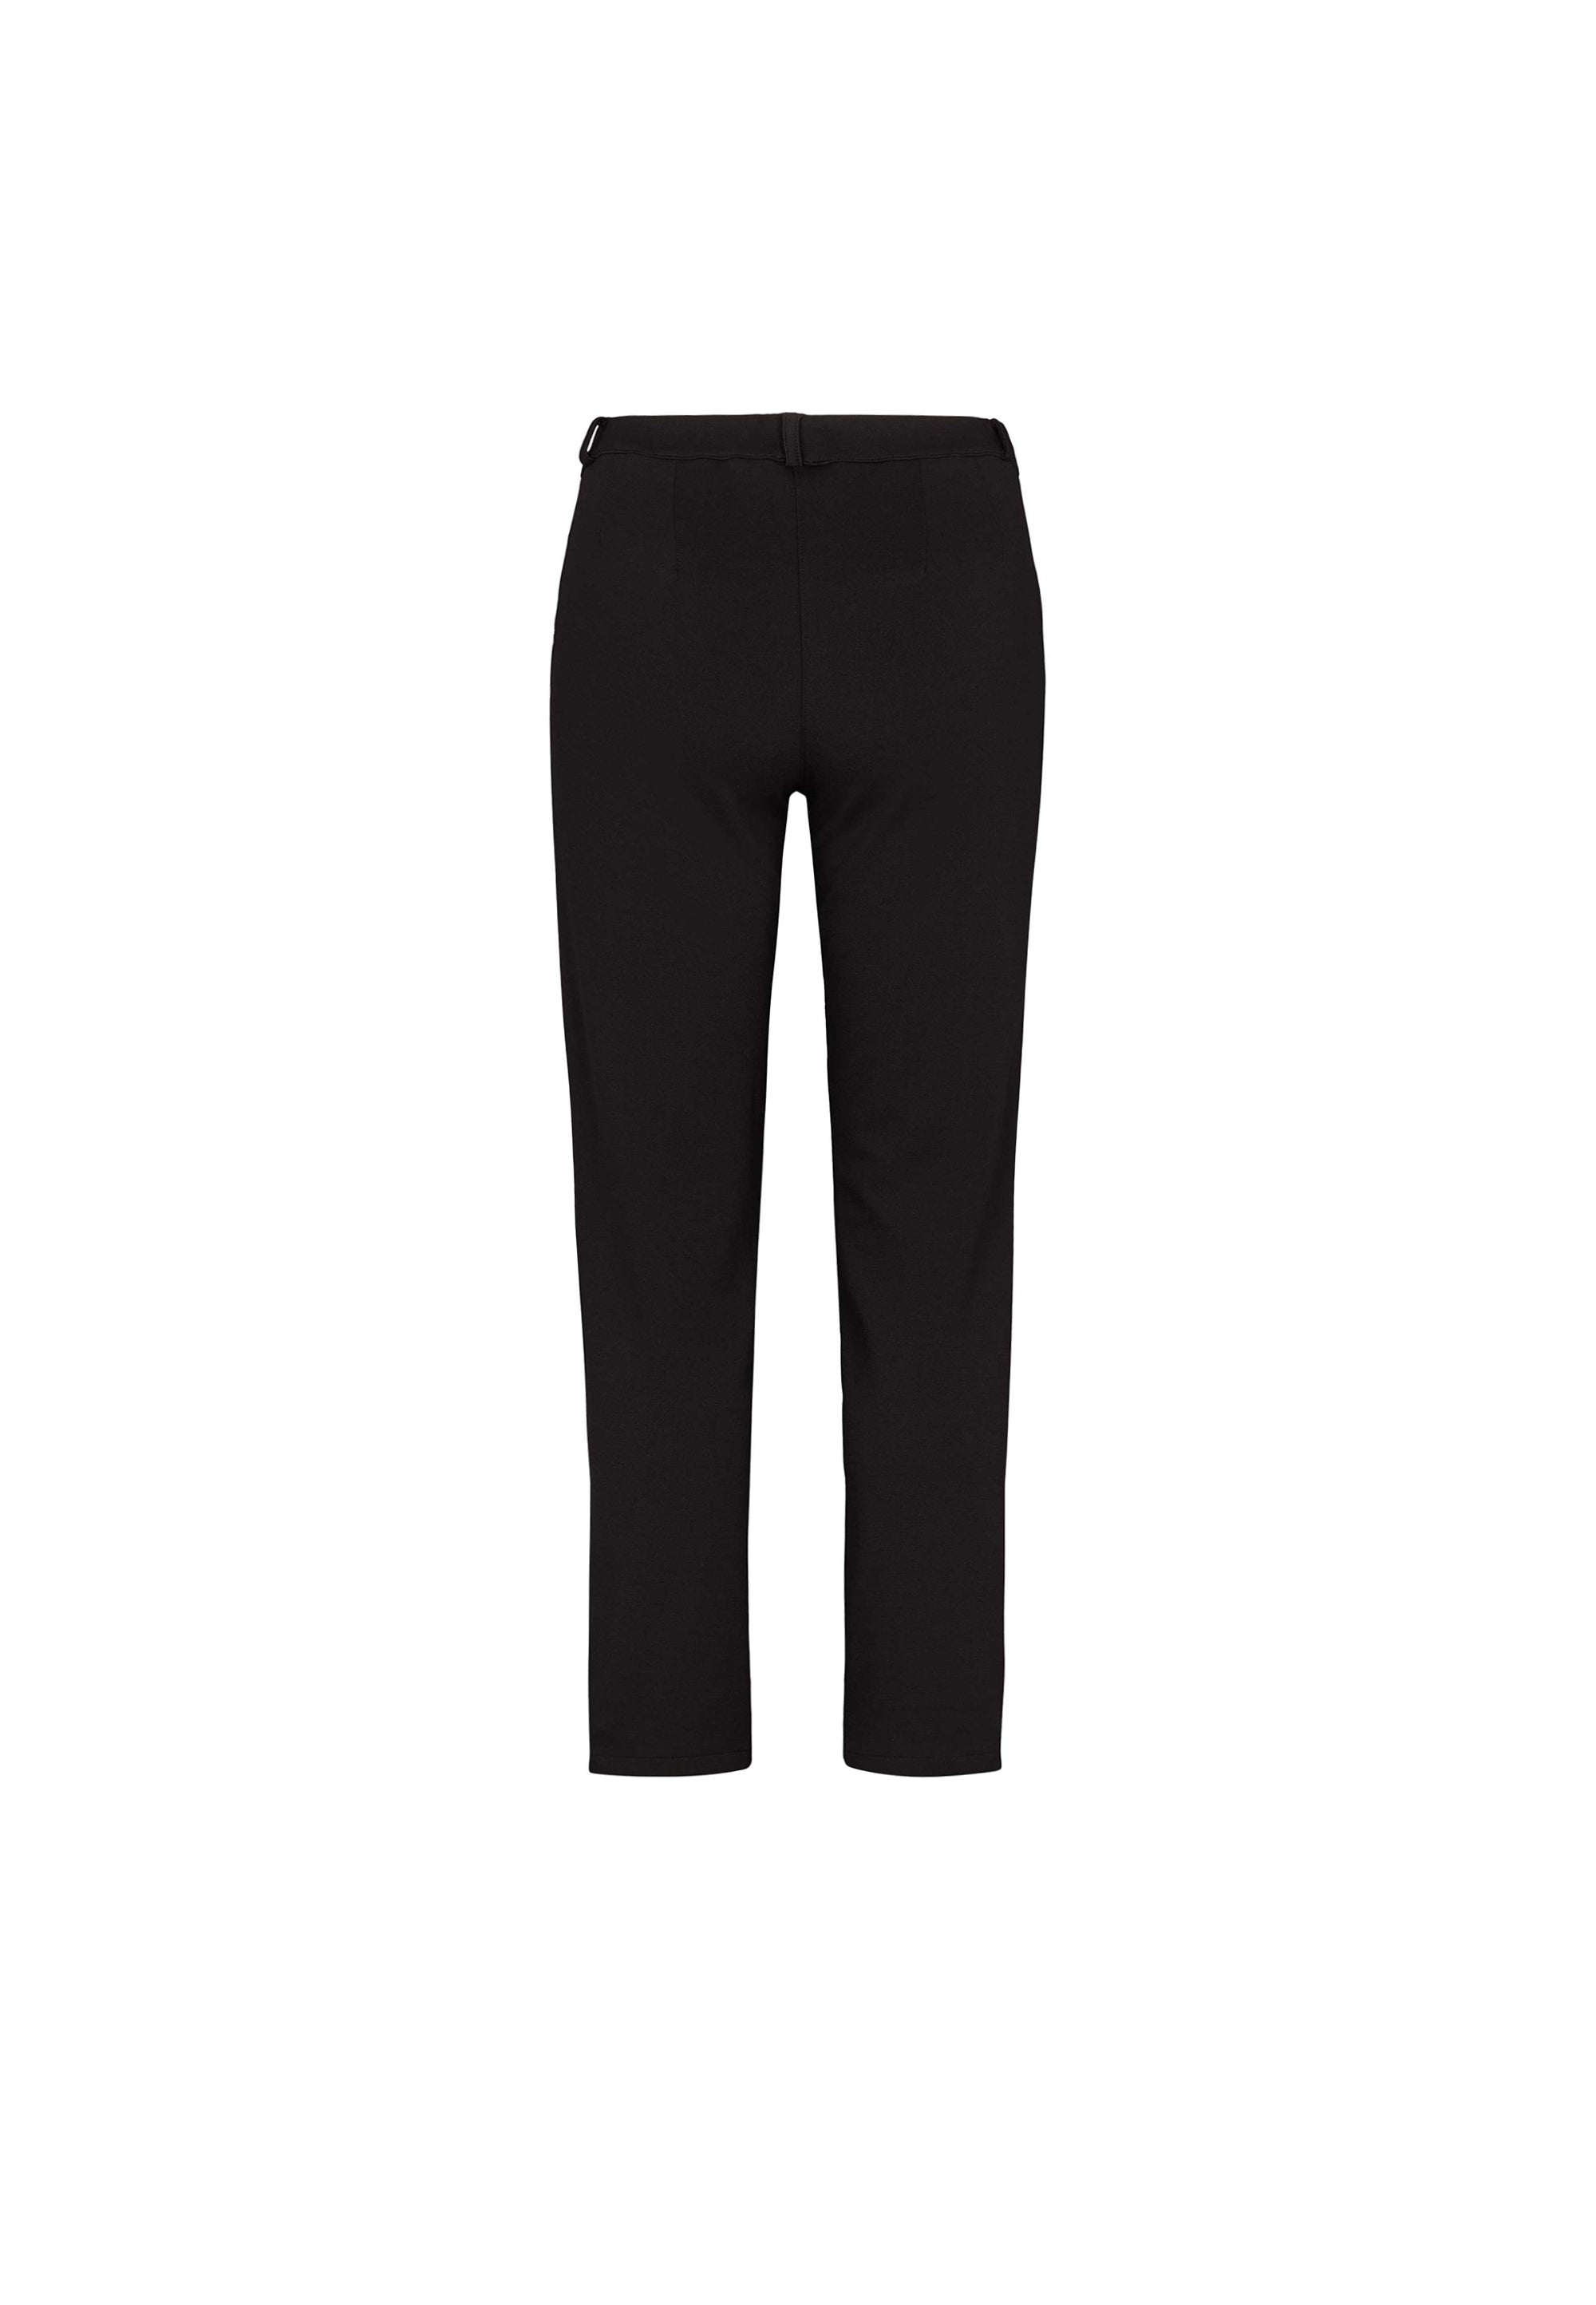 LAURIE  Rylie Regular - Short Length Trousers REGULAR 99147 Black